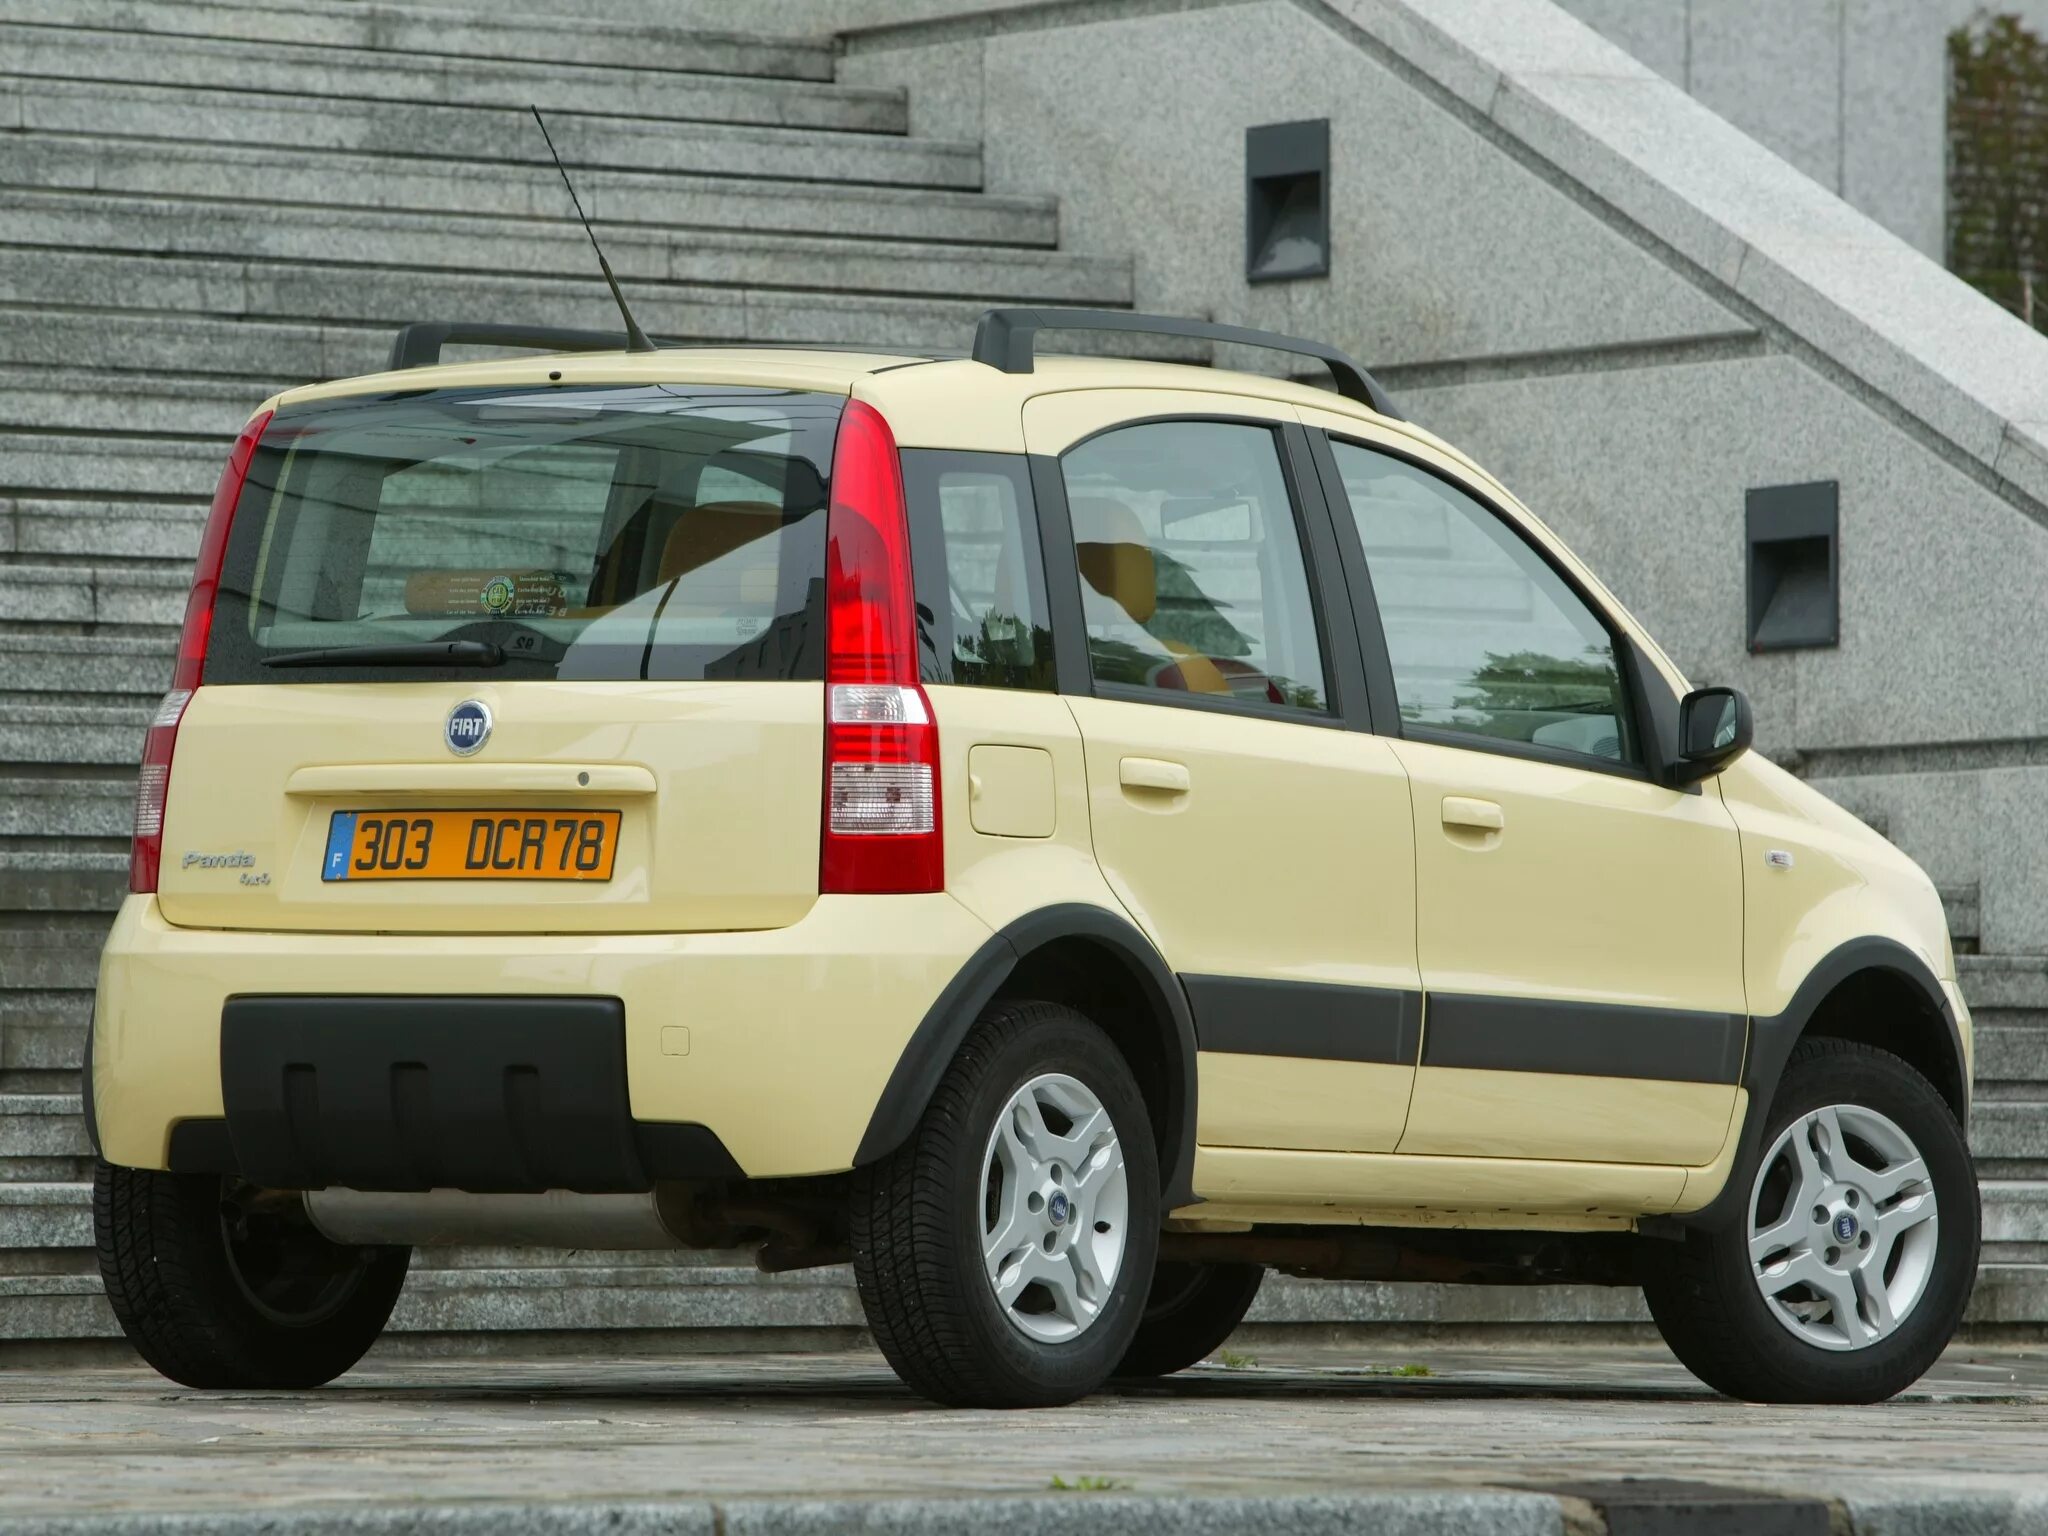 Fiat Panda 4x4. Фиат Панда 4*4. Fiat Panda 4x4 2003. Fiat Panda 4x4 1983.